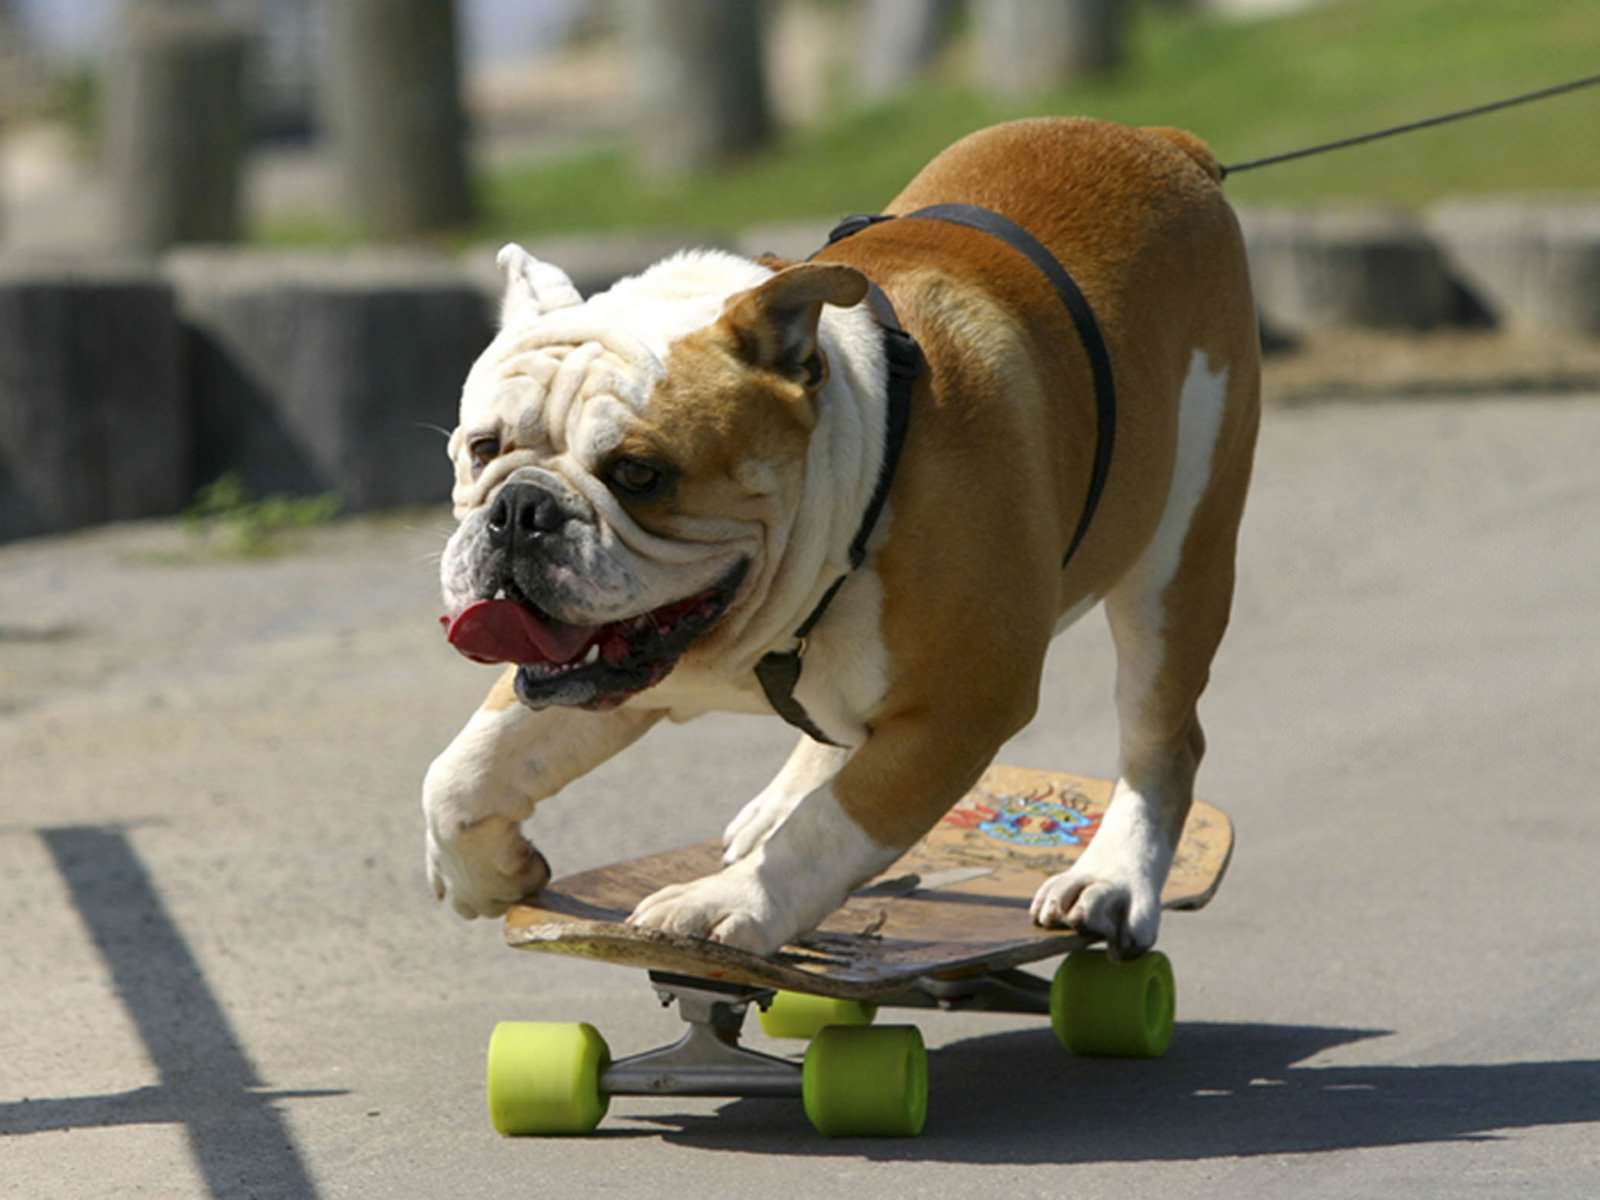 via Dogs-on-skateboards.tumblr.com 